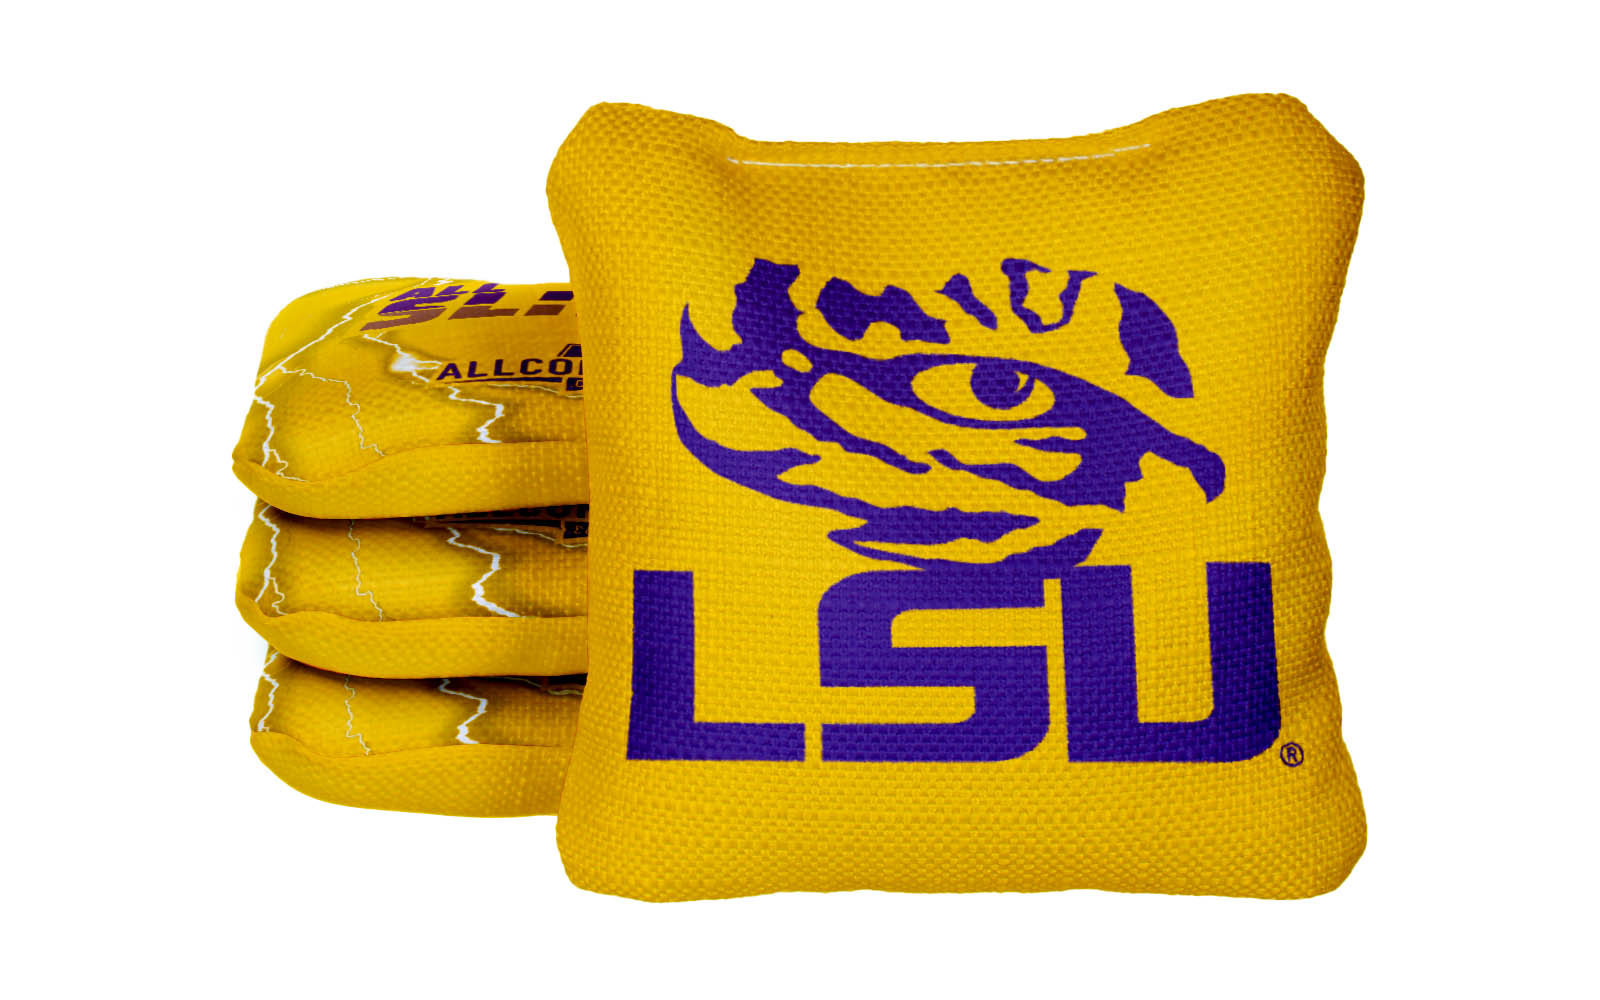 Officially Licensed Collegiate Cornhole Bags - AllCornhole All-Slide 2.0 - Set of 4 - Louisiana State University